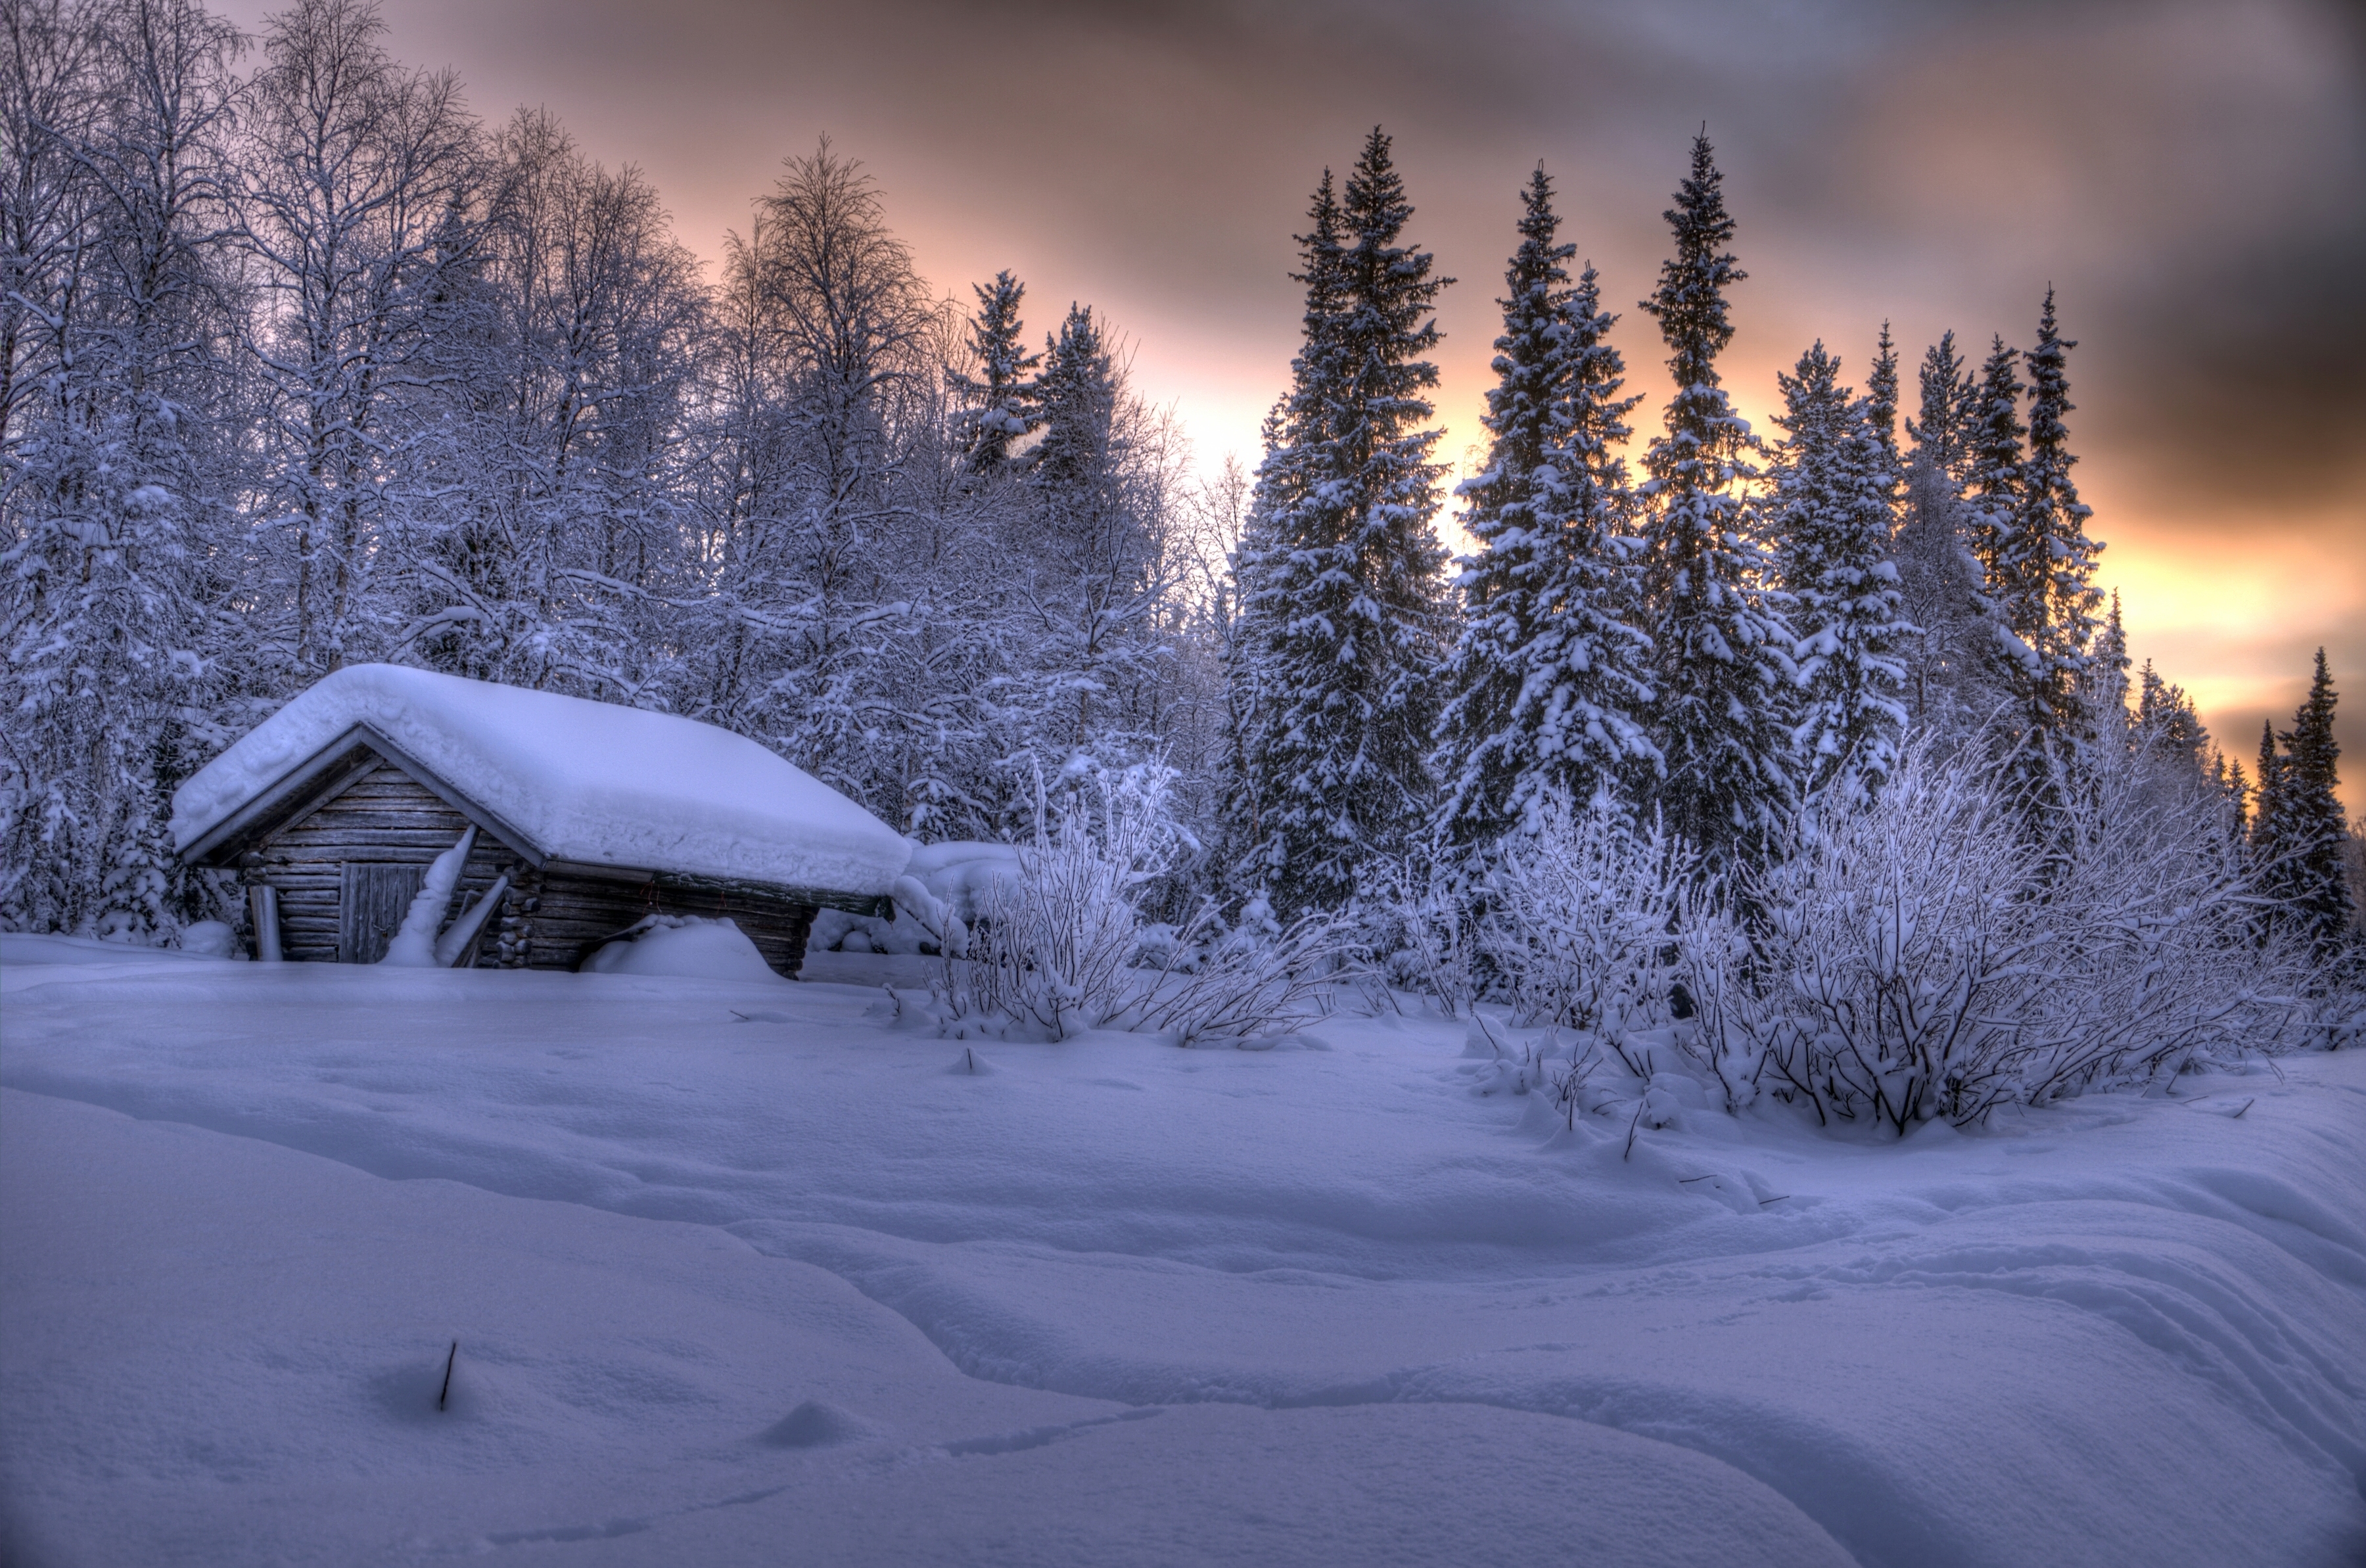 Зима. Финляндия зимняя избушка. Зима в лесу. Избушка в лесу зимой. Домик в зимнем лесу.